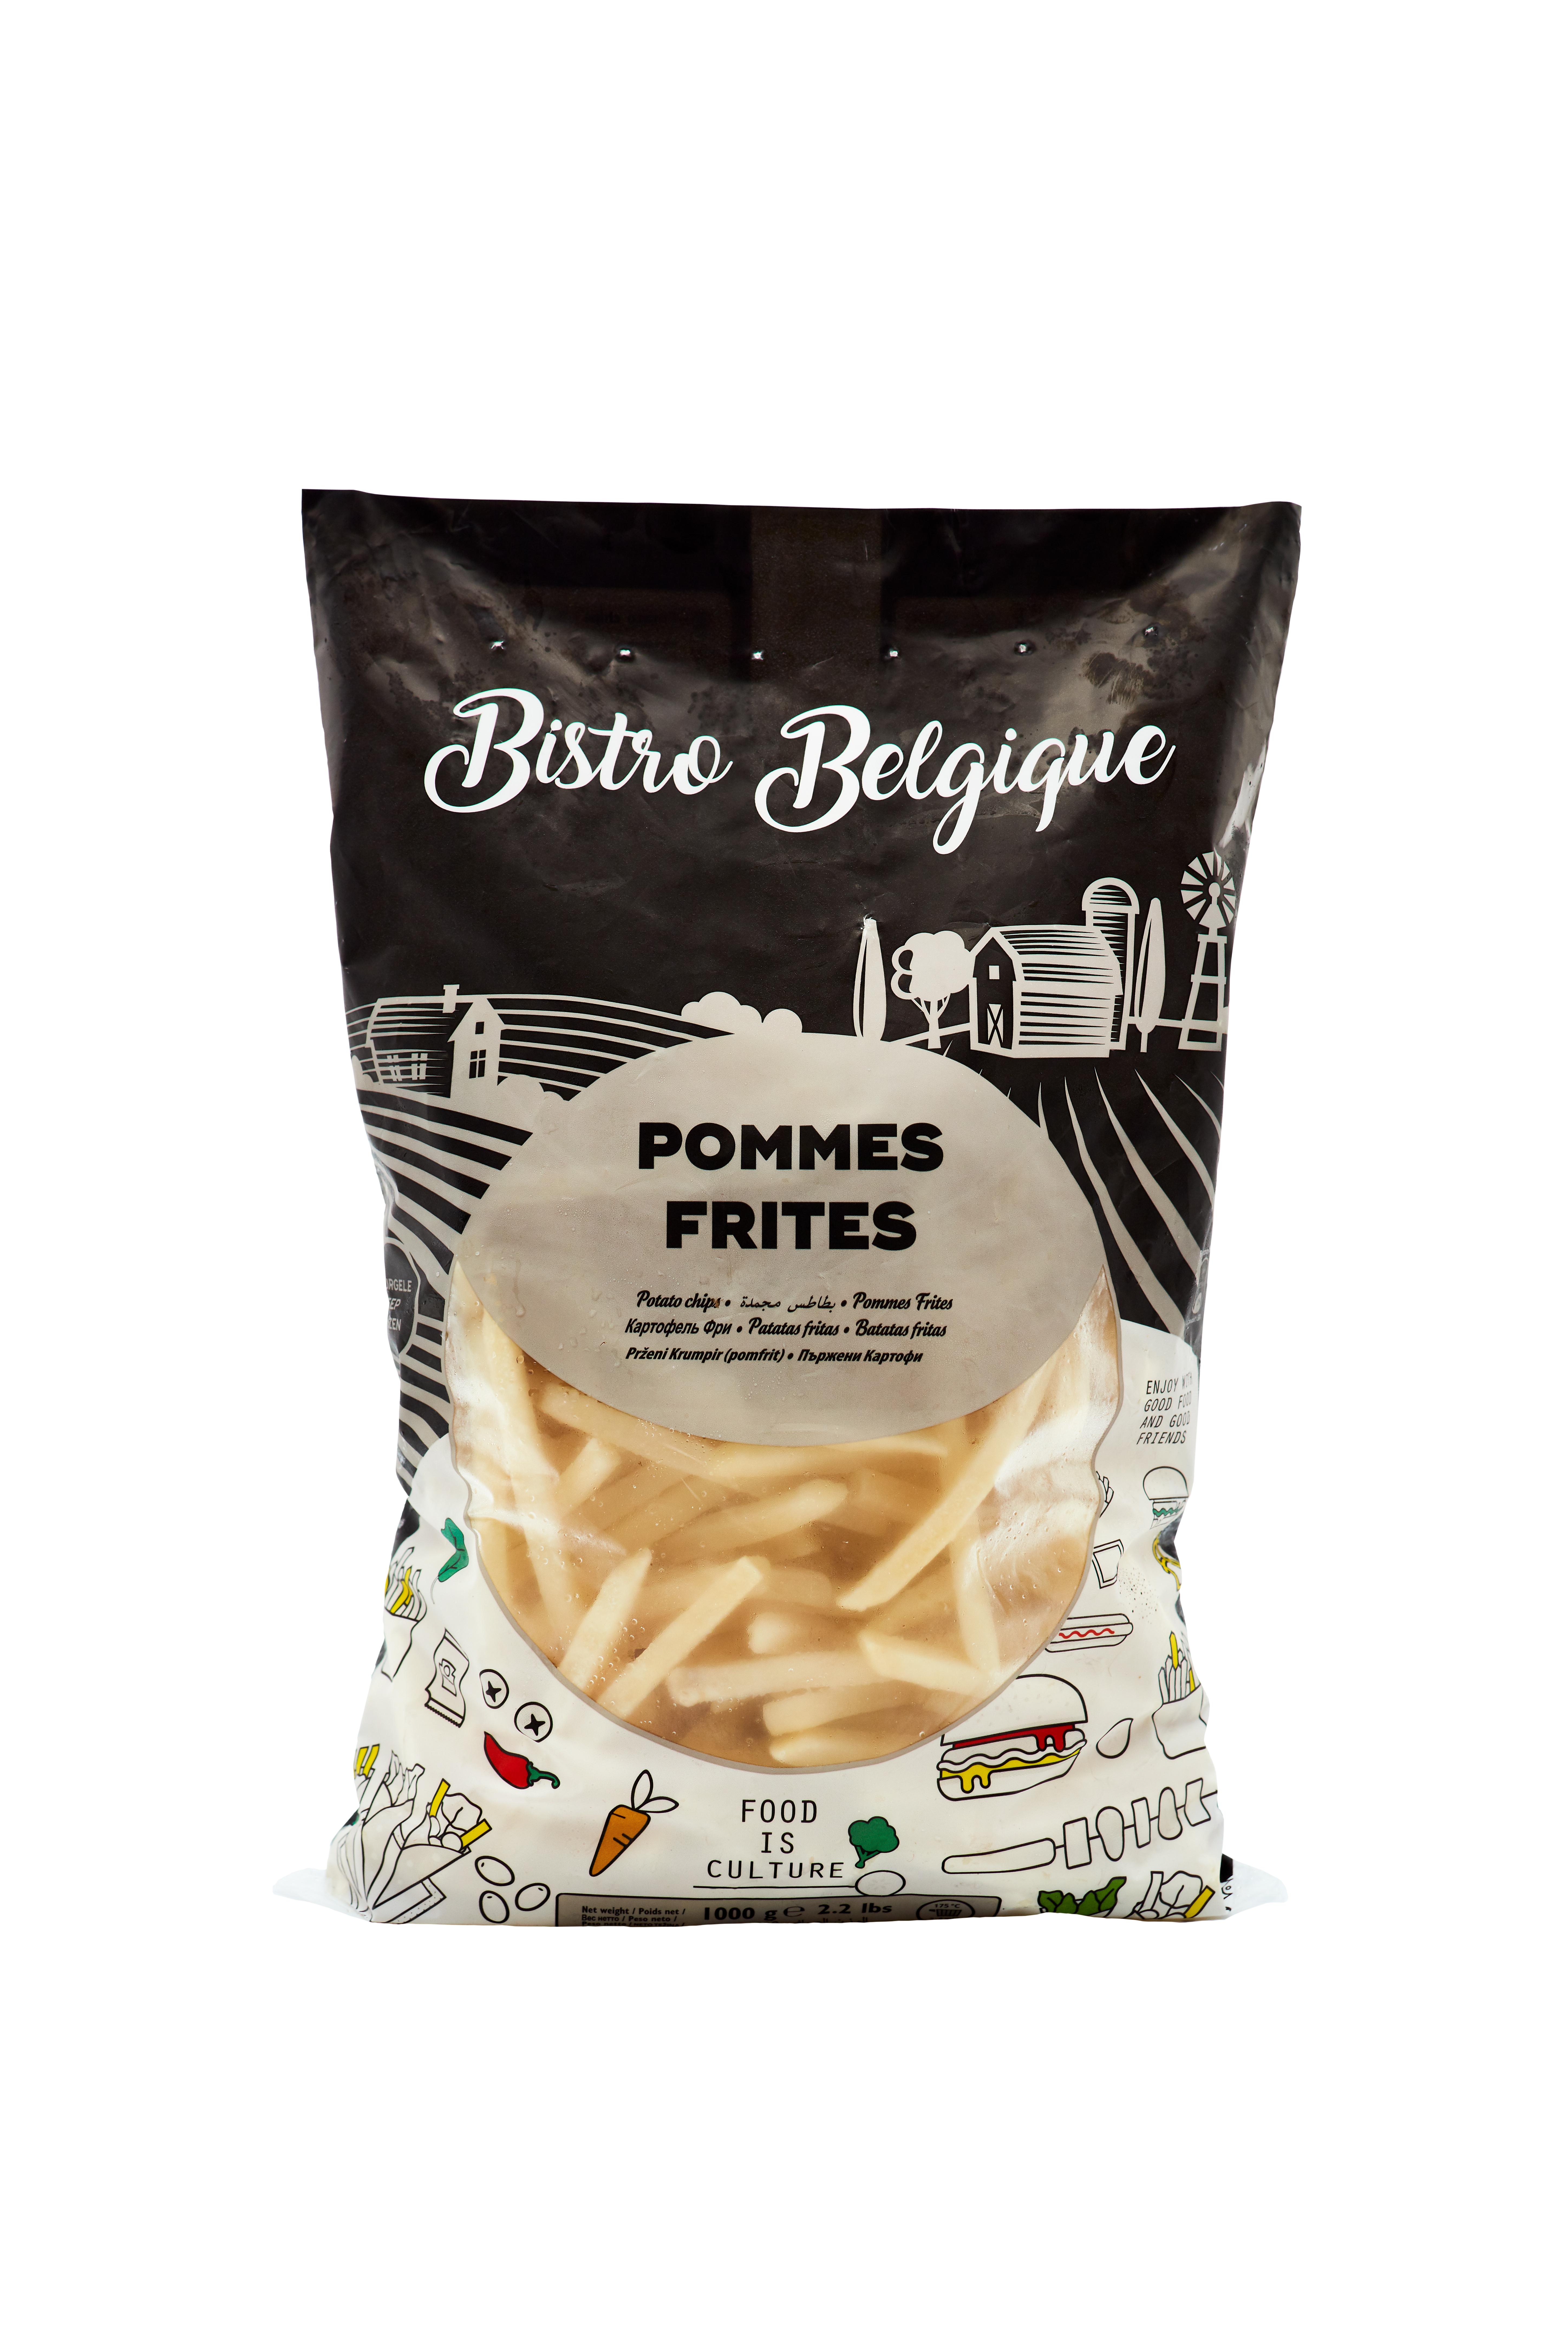 potato cubes packaging Bistro Belgique brand